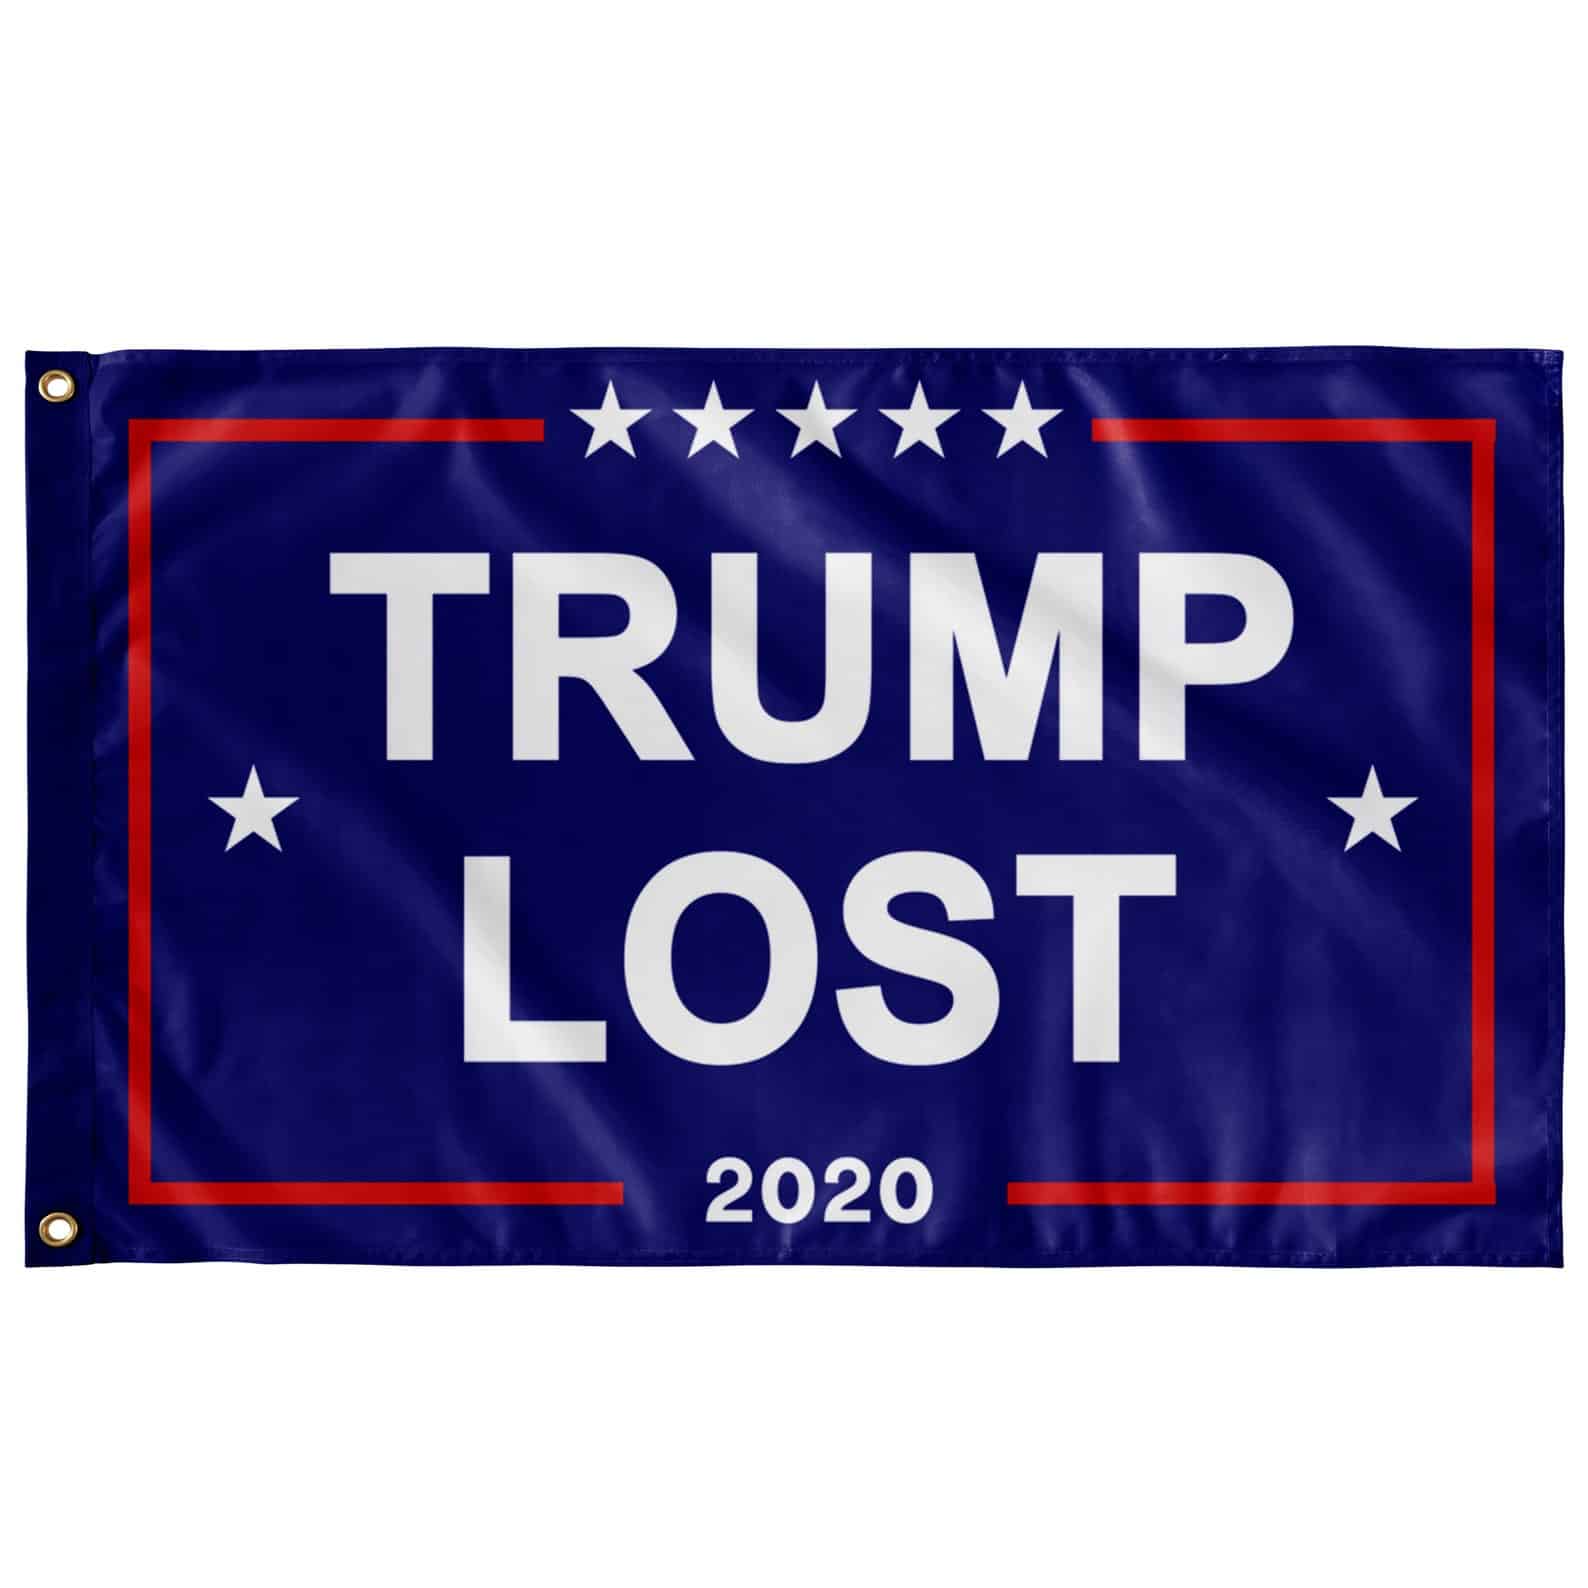 Trump Lost 2020 Printed Protest Flag Trump Lost Poster 3x5